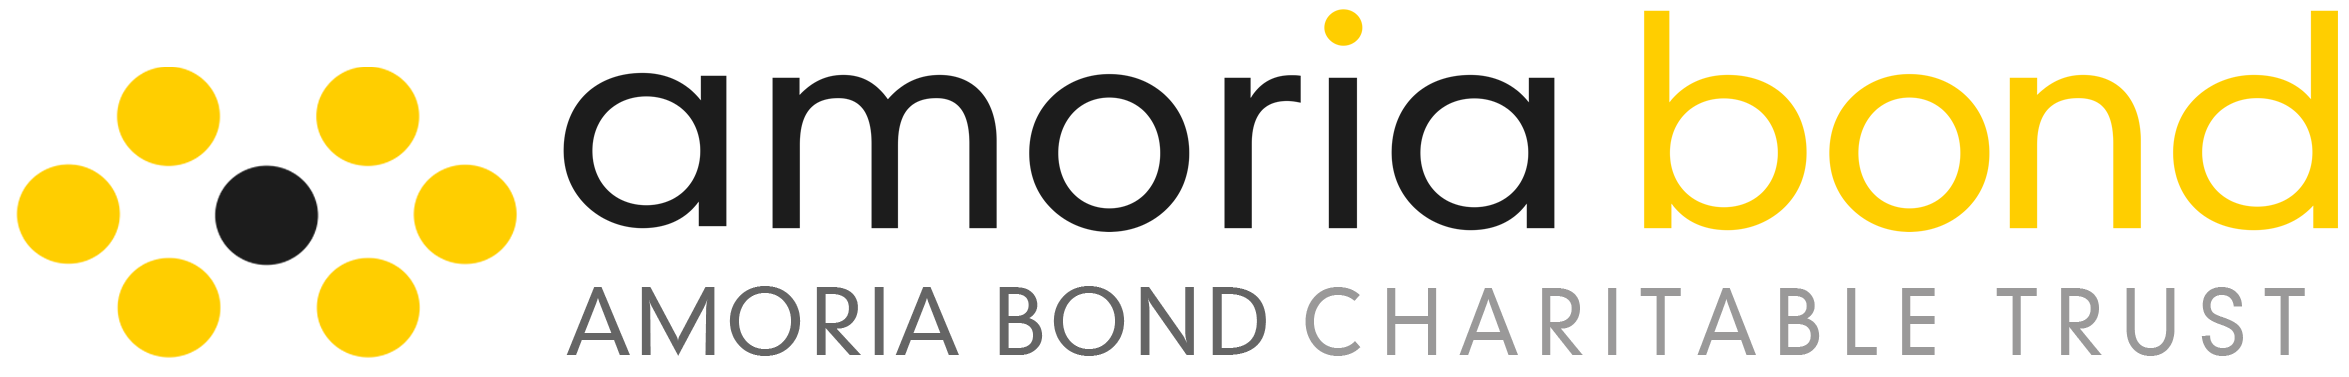 Amoria Bond Charitable Trust logo